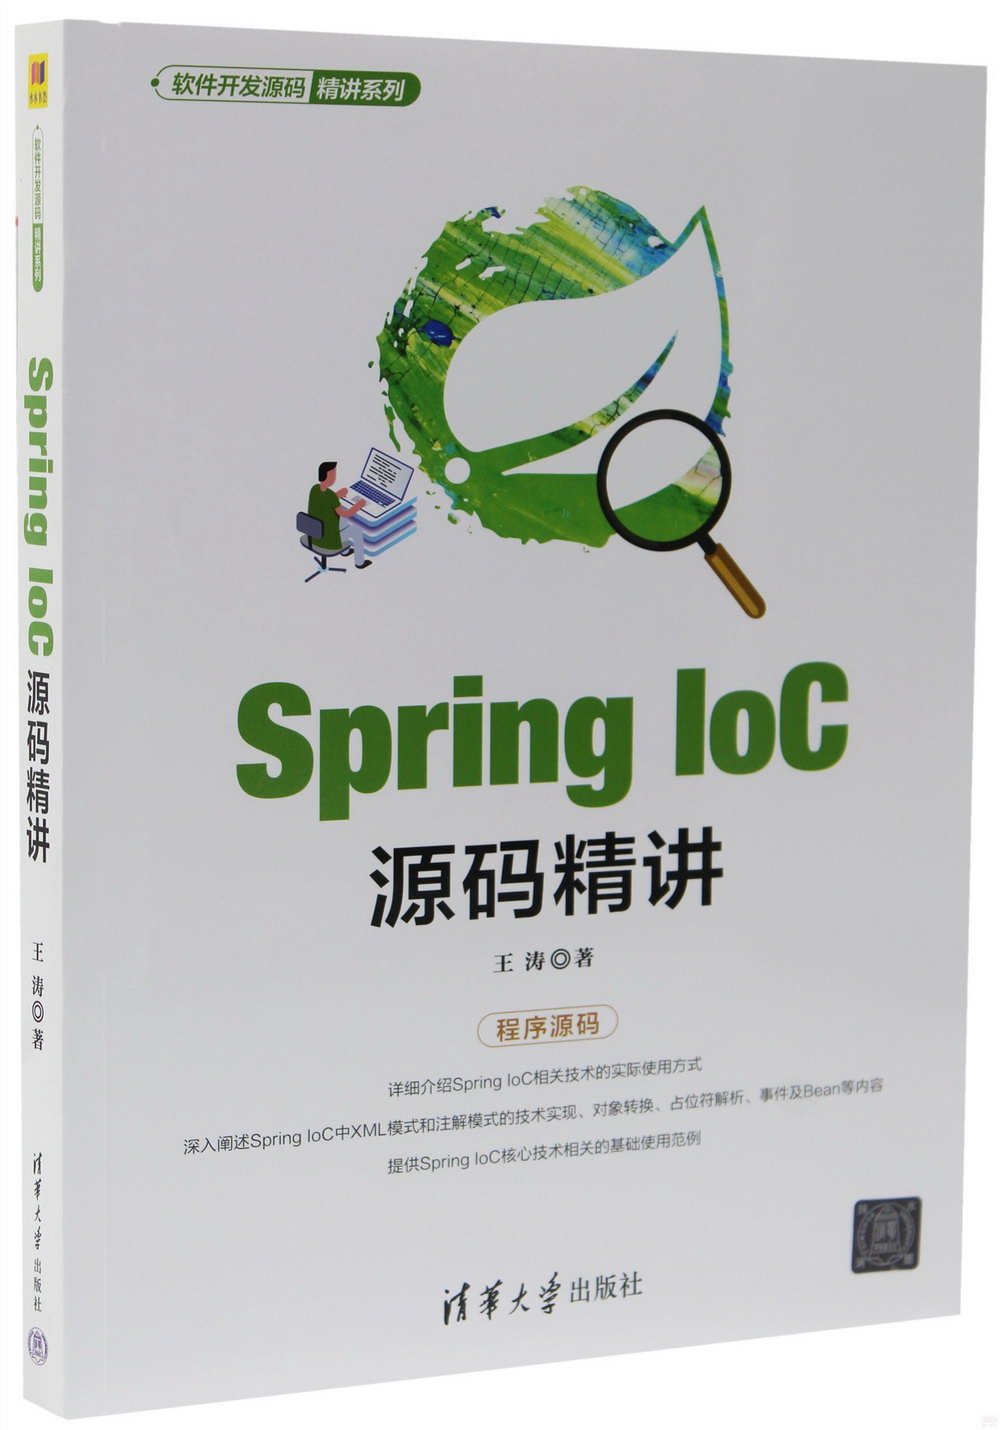 Spring IoC源碼精講